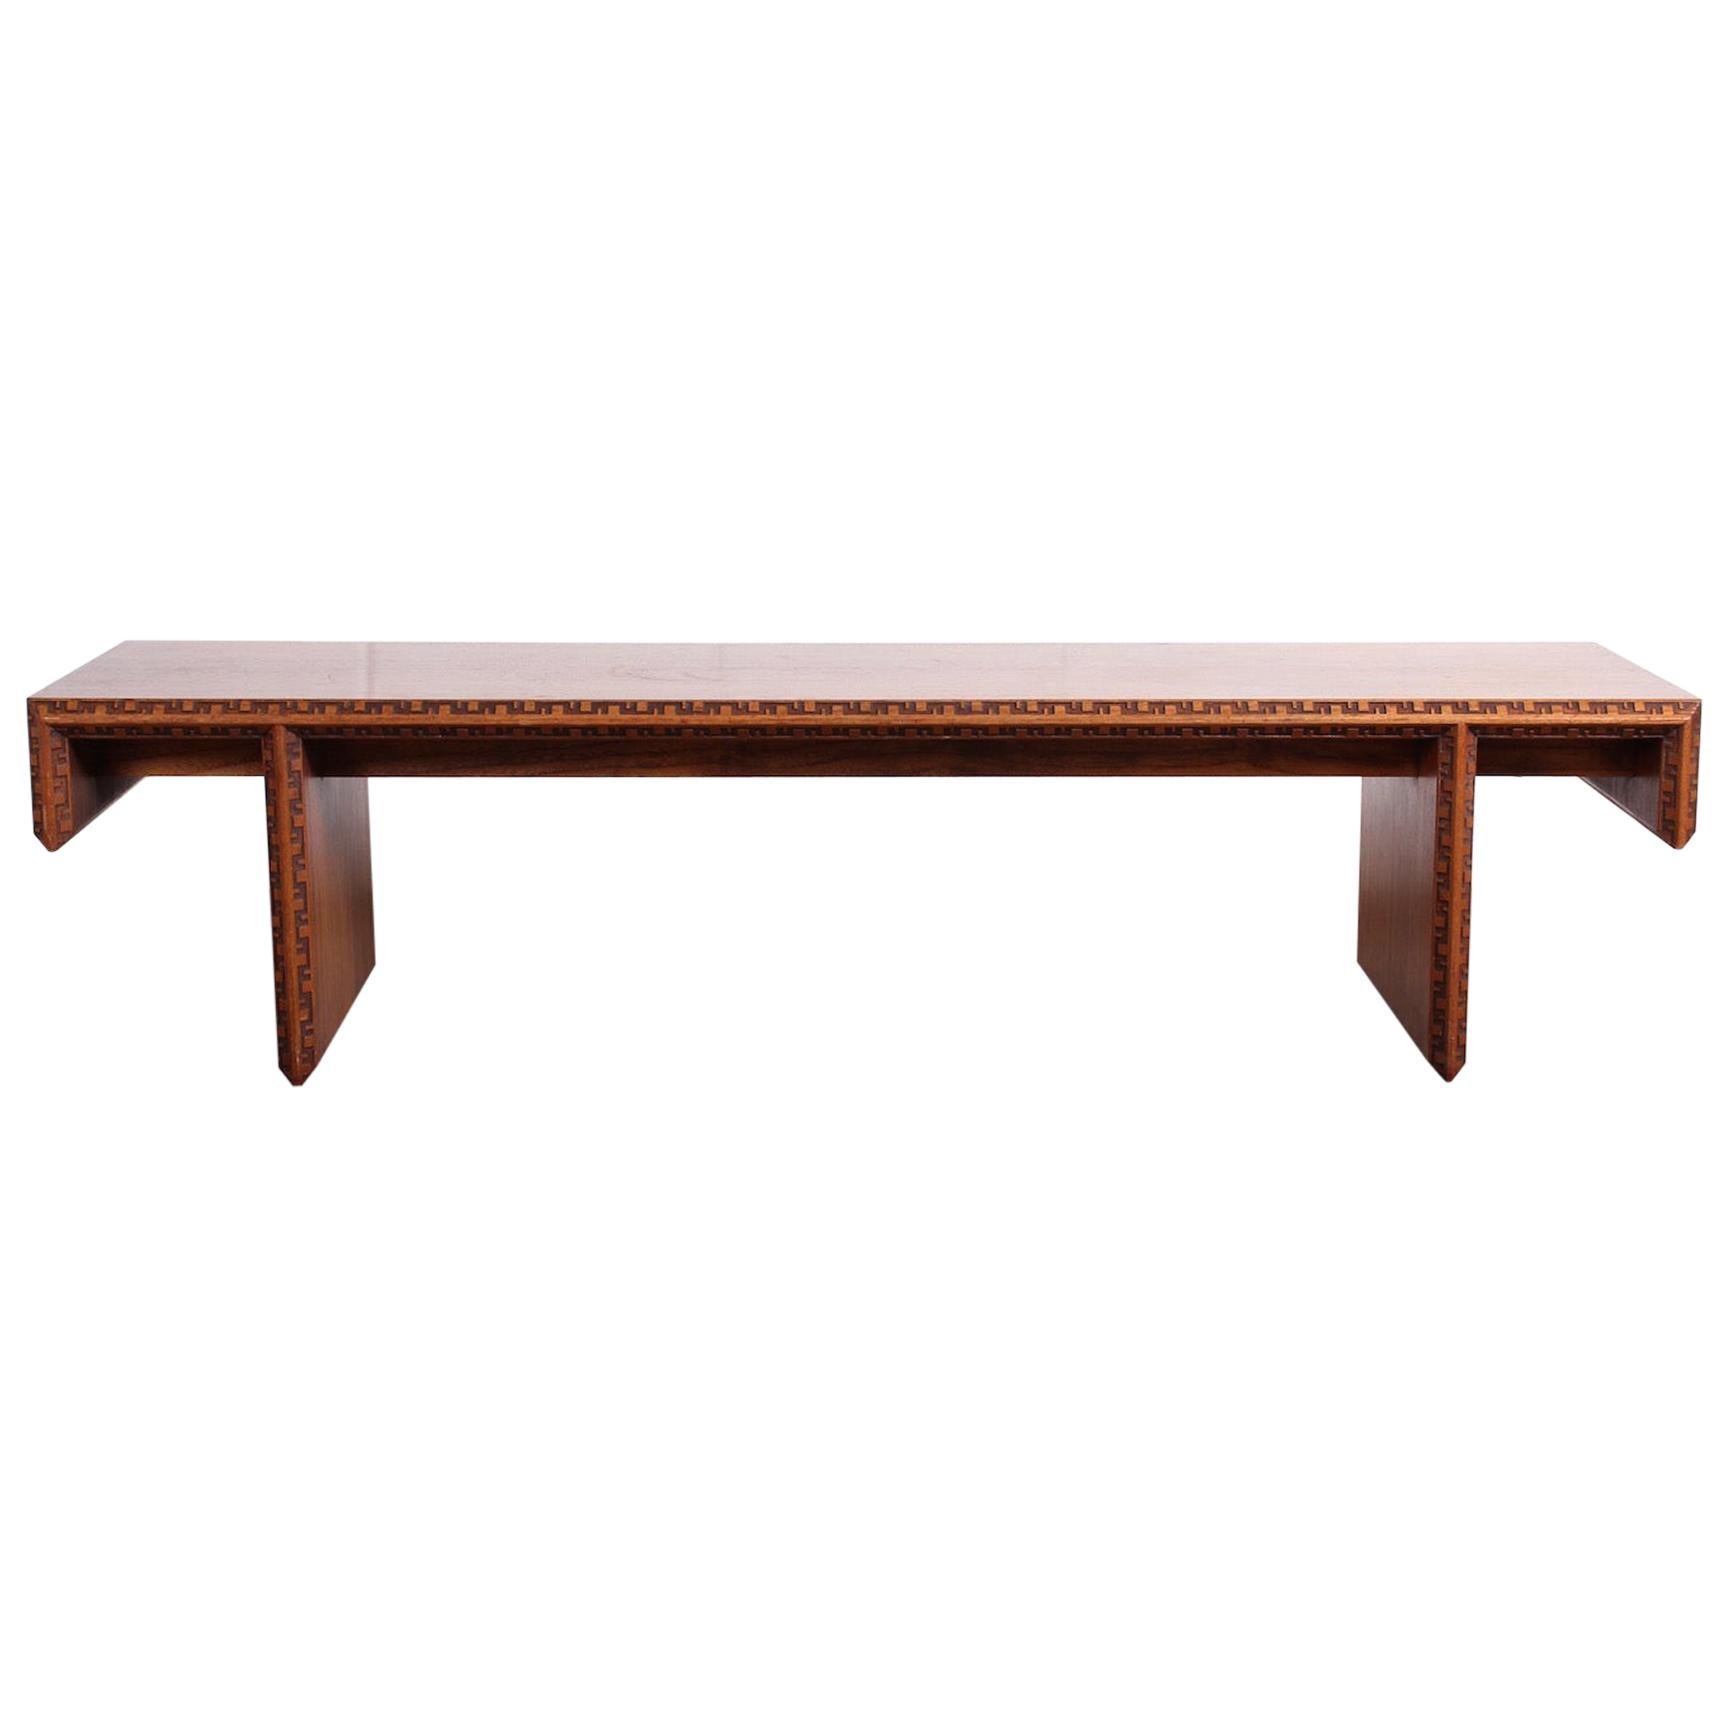 Frank Lloyd Wright 'Taliesin' Coffee Table / Bench